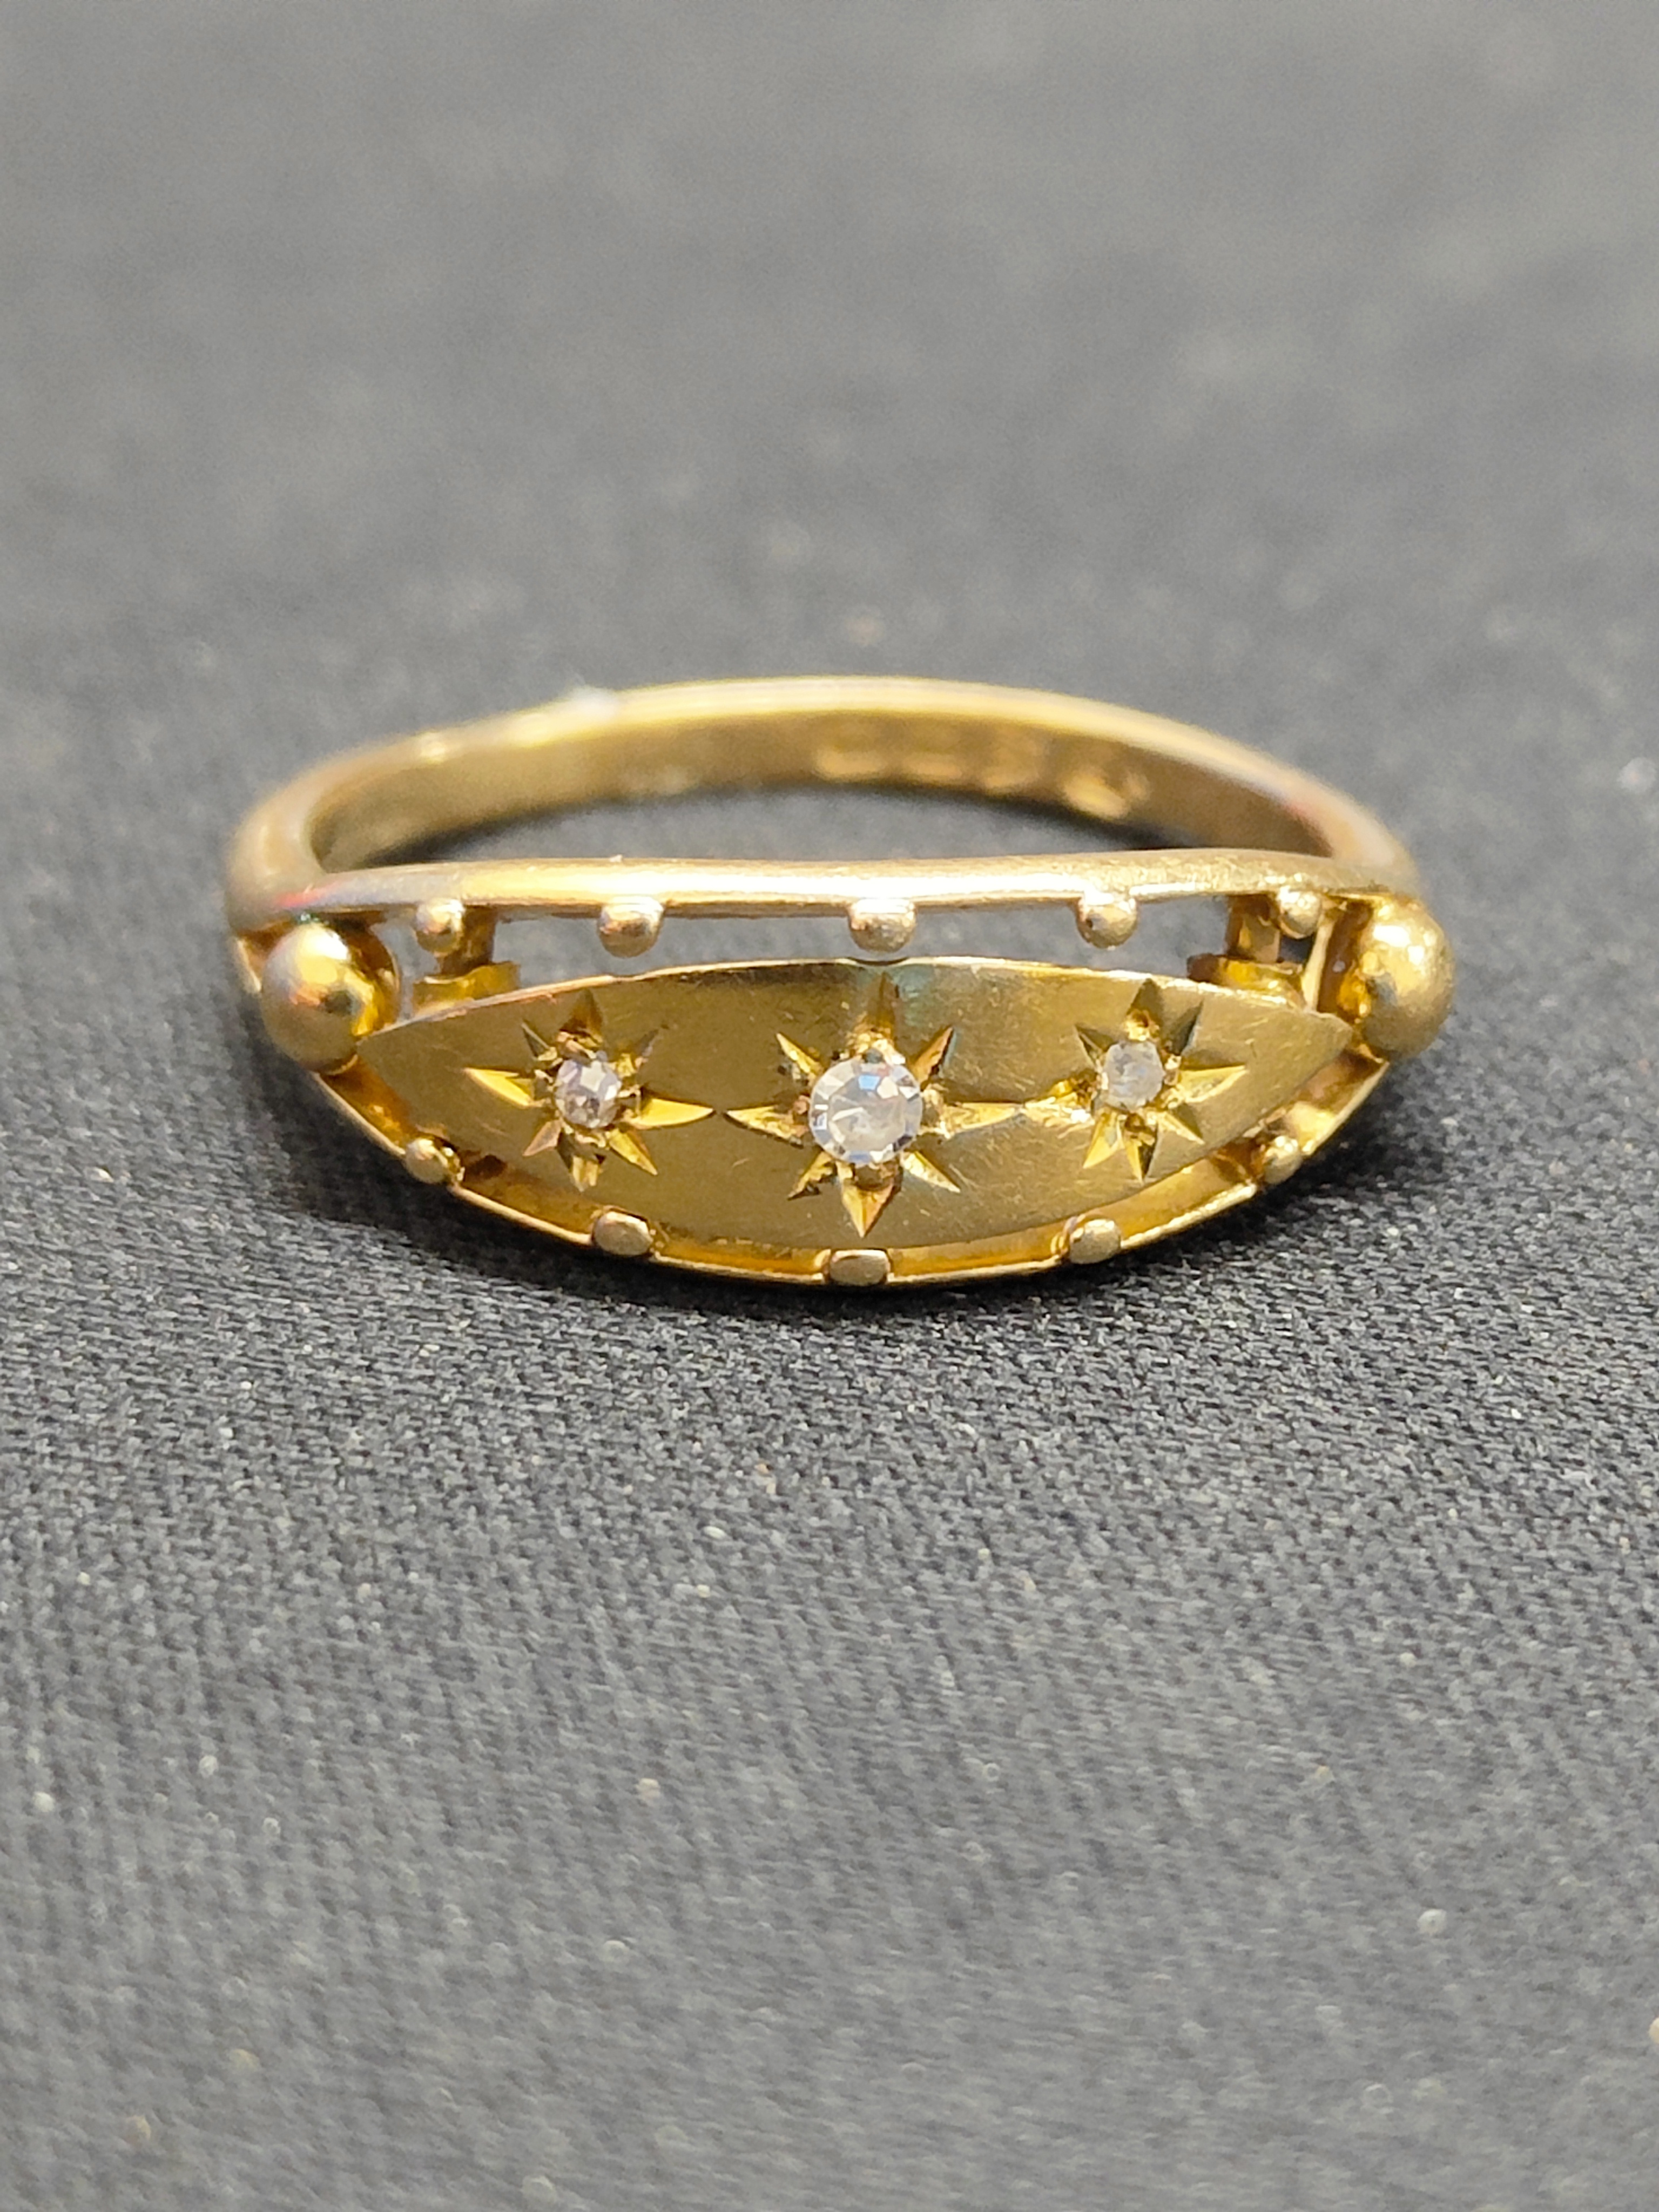 18 CARAT YELLOW GOLD AND DIAMOND RING - CIRCA 1911 - Image 3 of 5